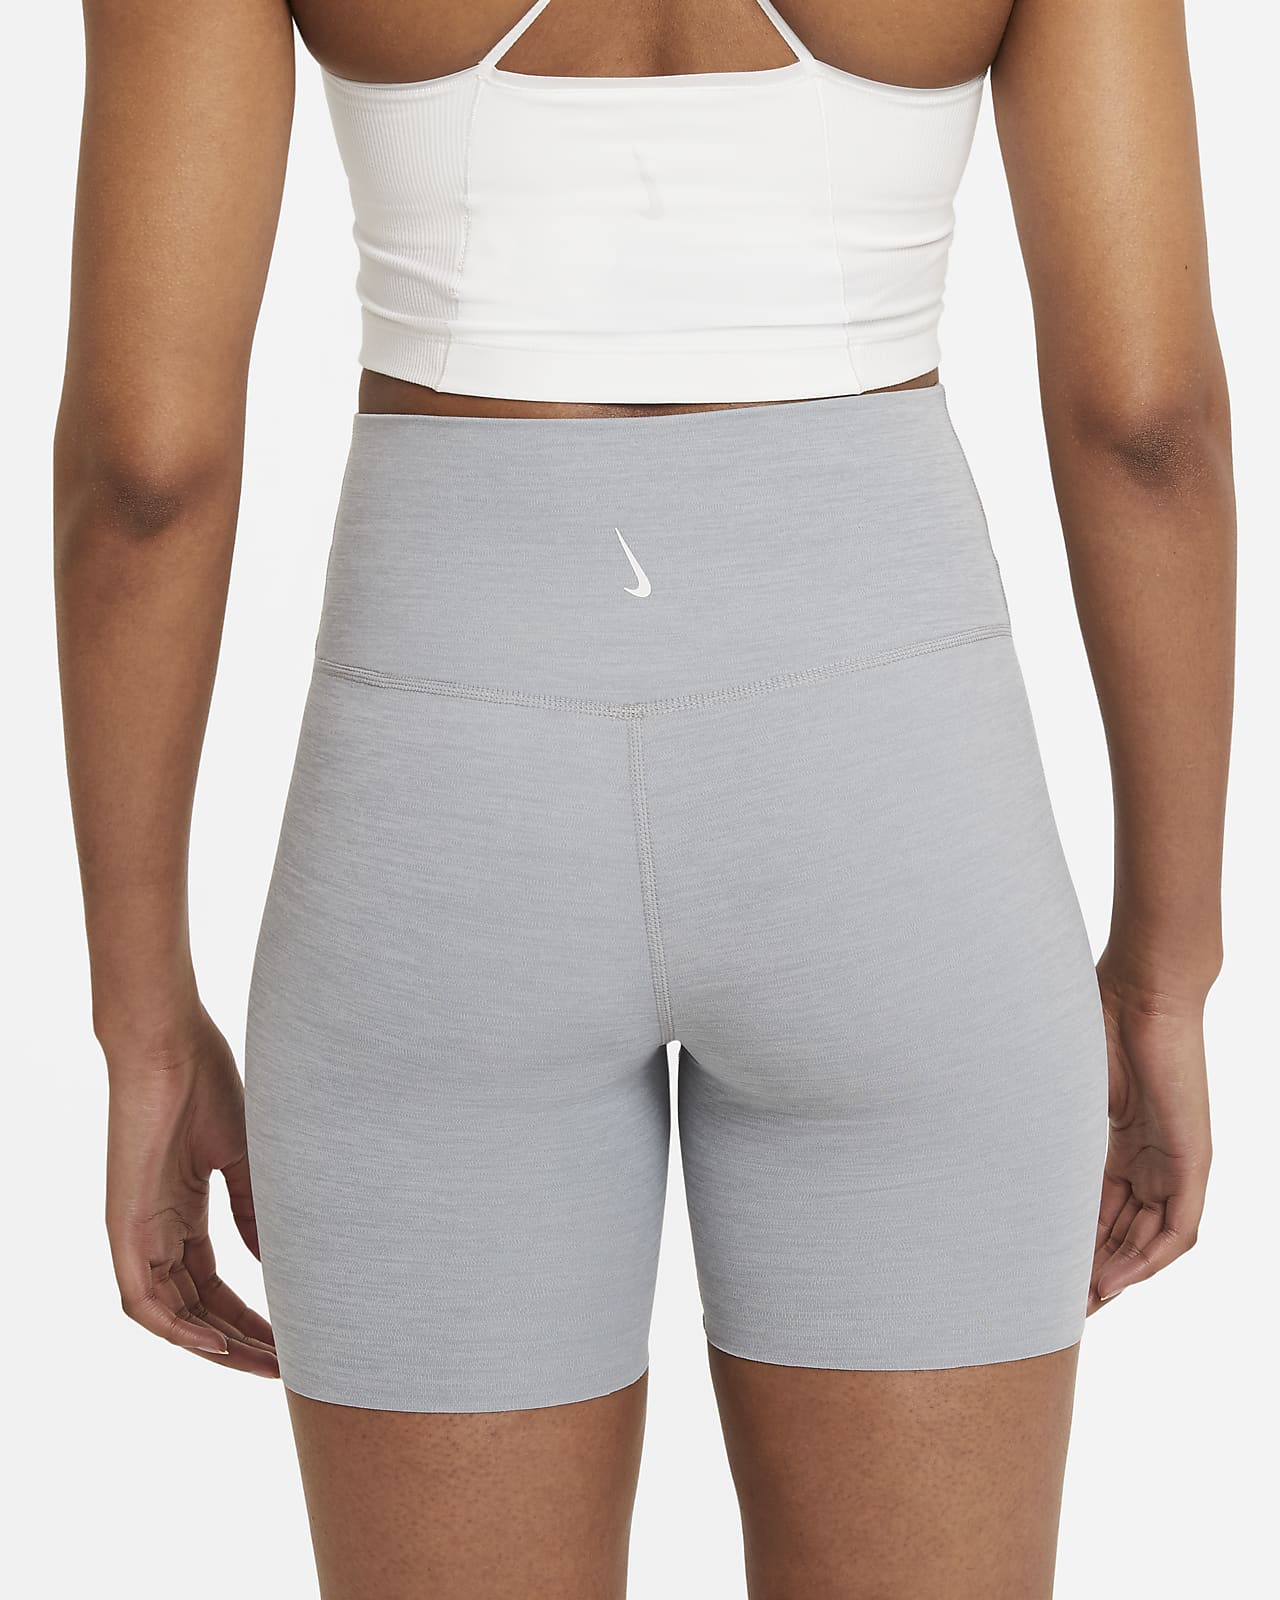 Nike Yoga Luxe Women's High-Waisted Shorts.